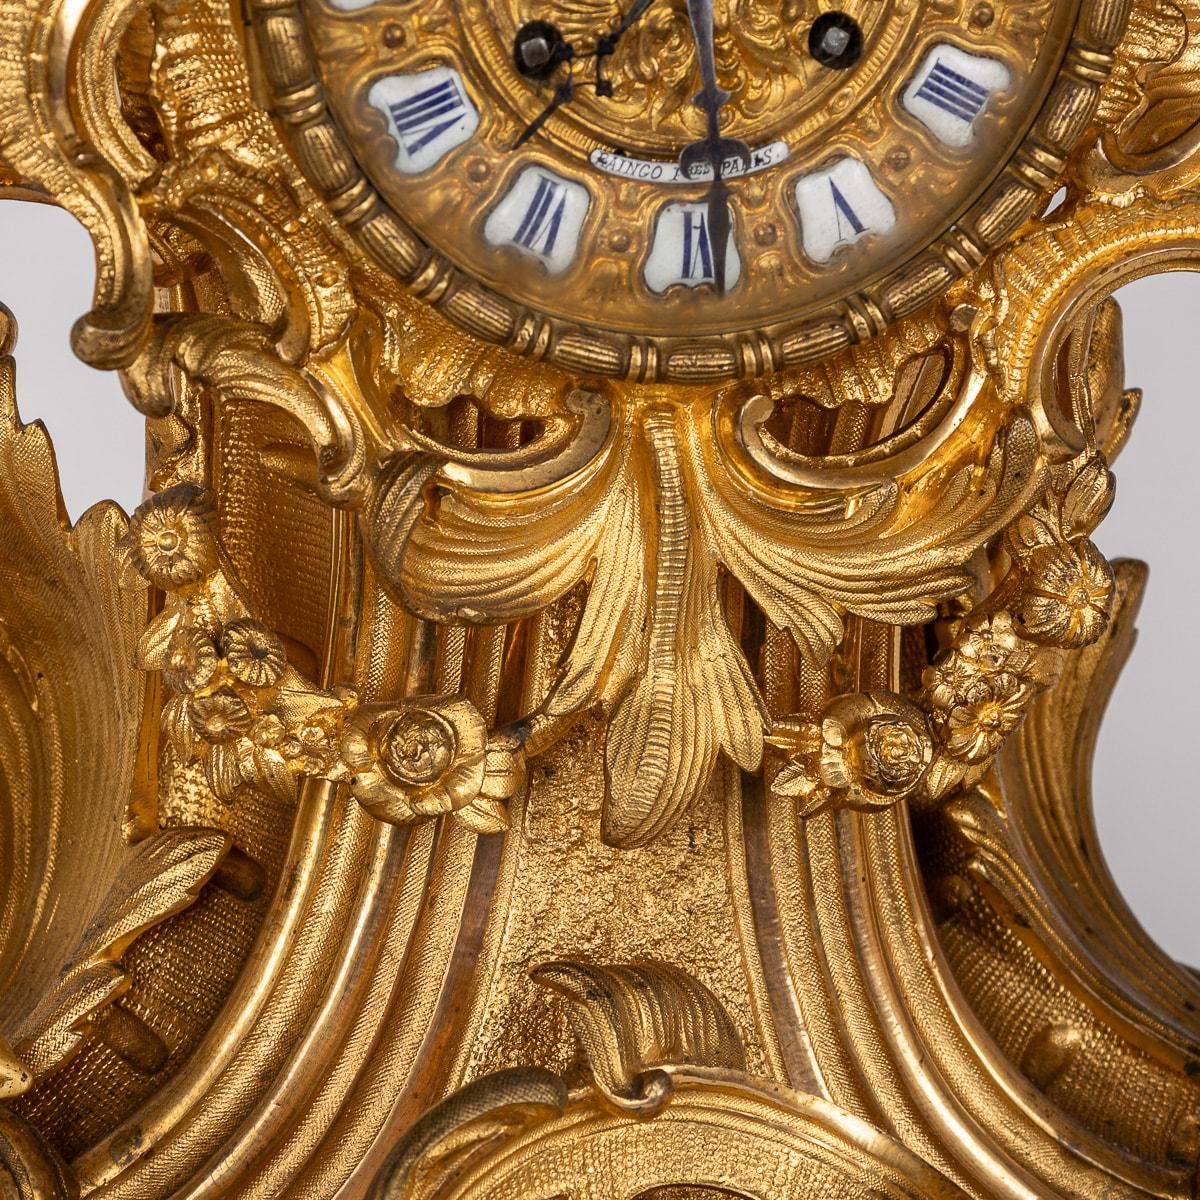 Antique 19th Century French Gilt Bronze Clock, Raingo Freres, Paris c.1850 For Sale 10